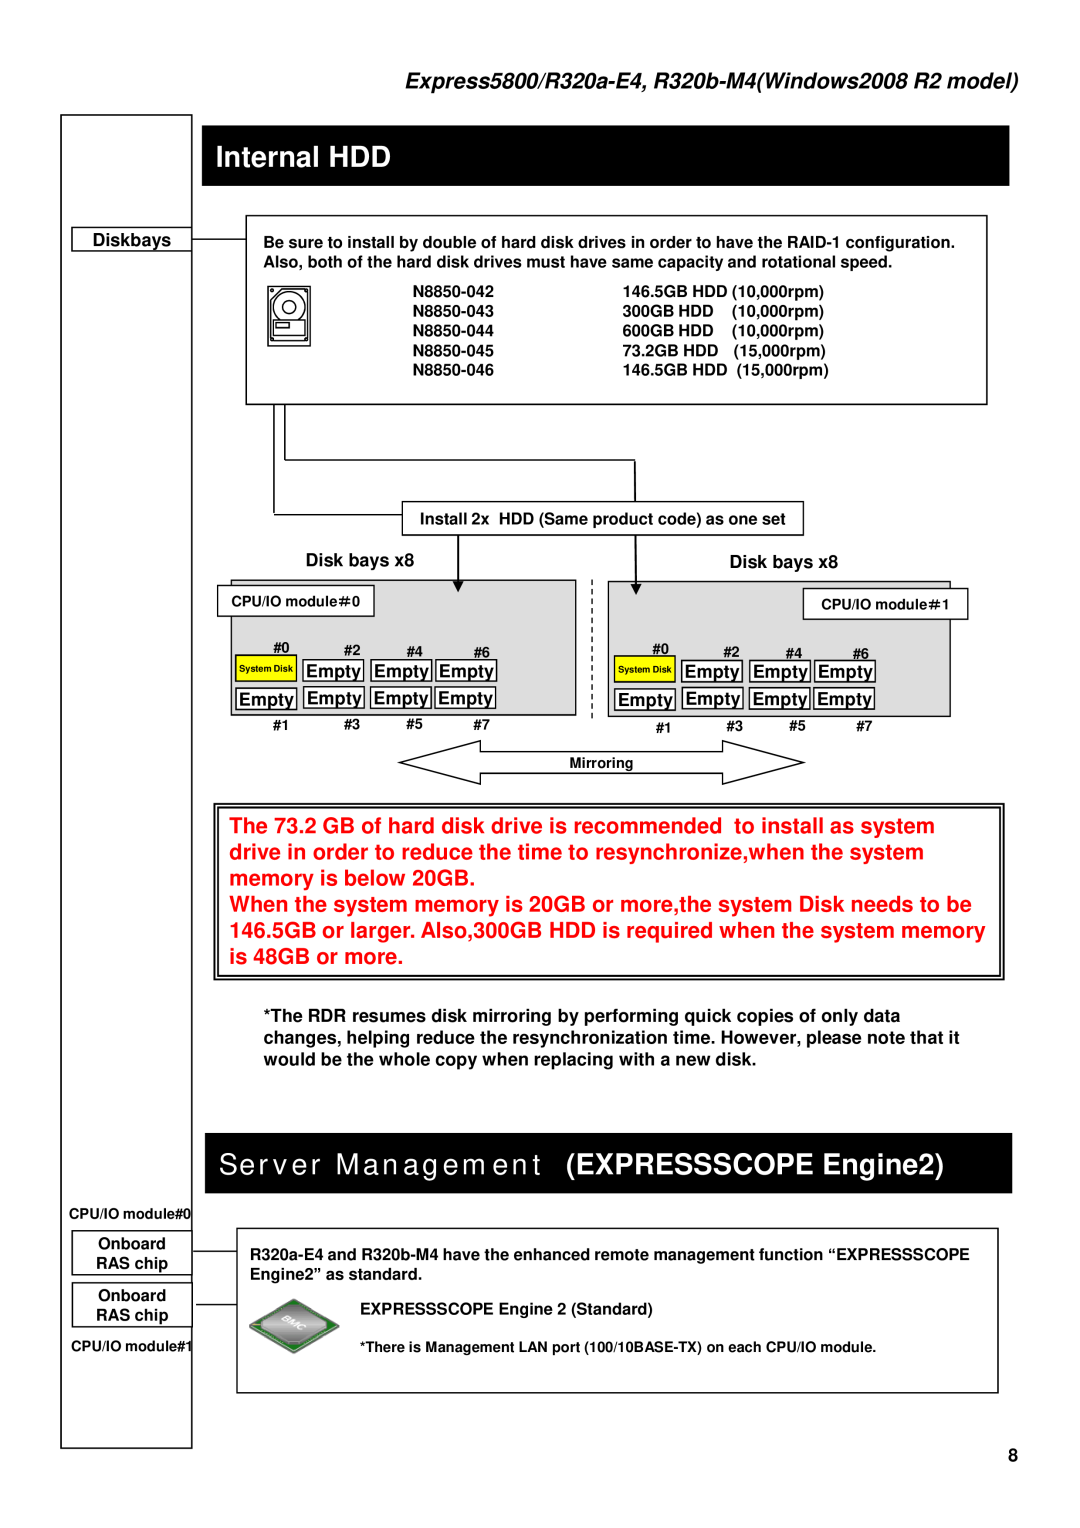 NEC R320B-M4 manual Internal HDD, Server Management EXPRESSSCOPE Engine2, Express5800/R320a-E4, R320b-M4Windows2008R2 model 